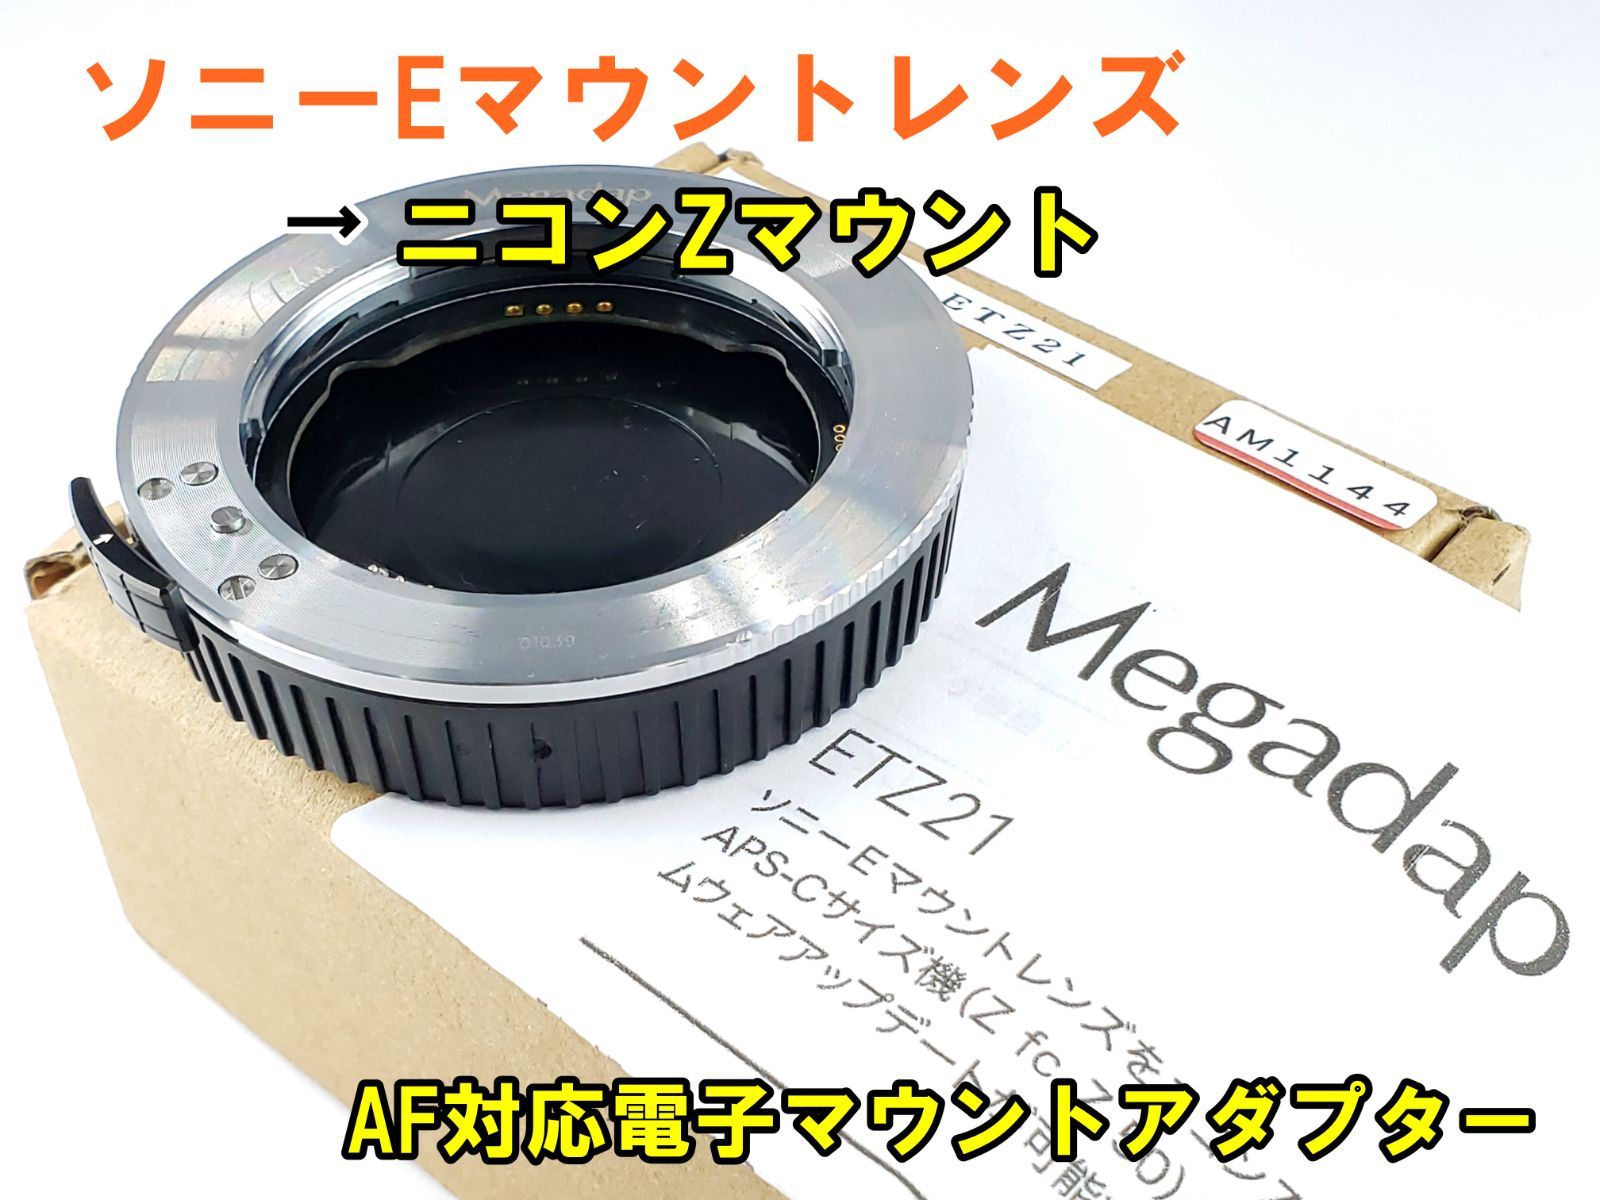 Megadap ETZ21 電子マウントアダプター - その他